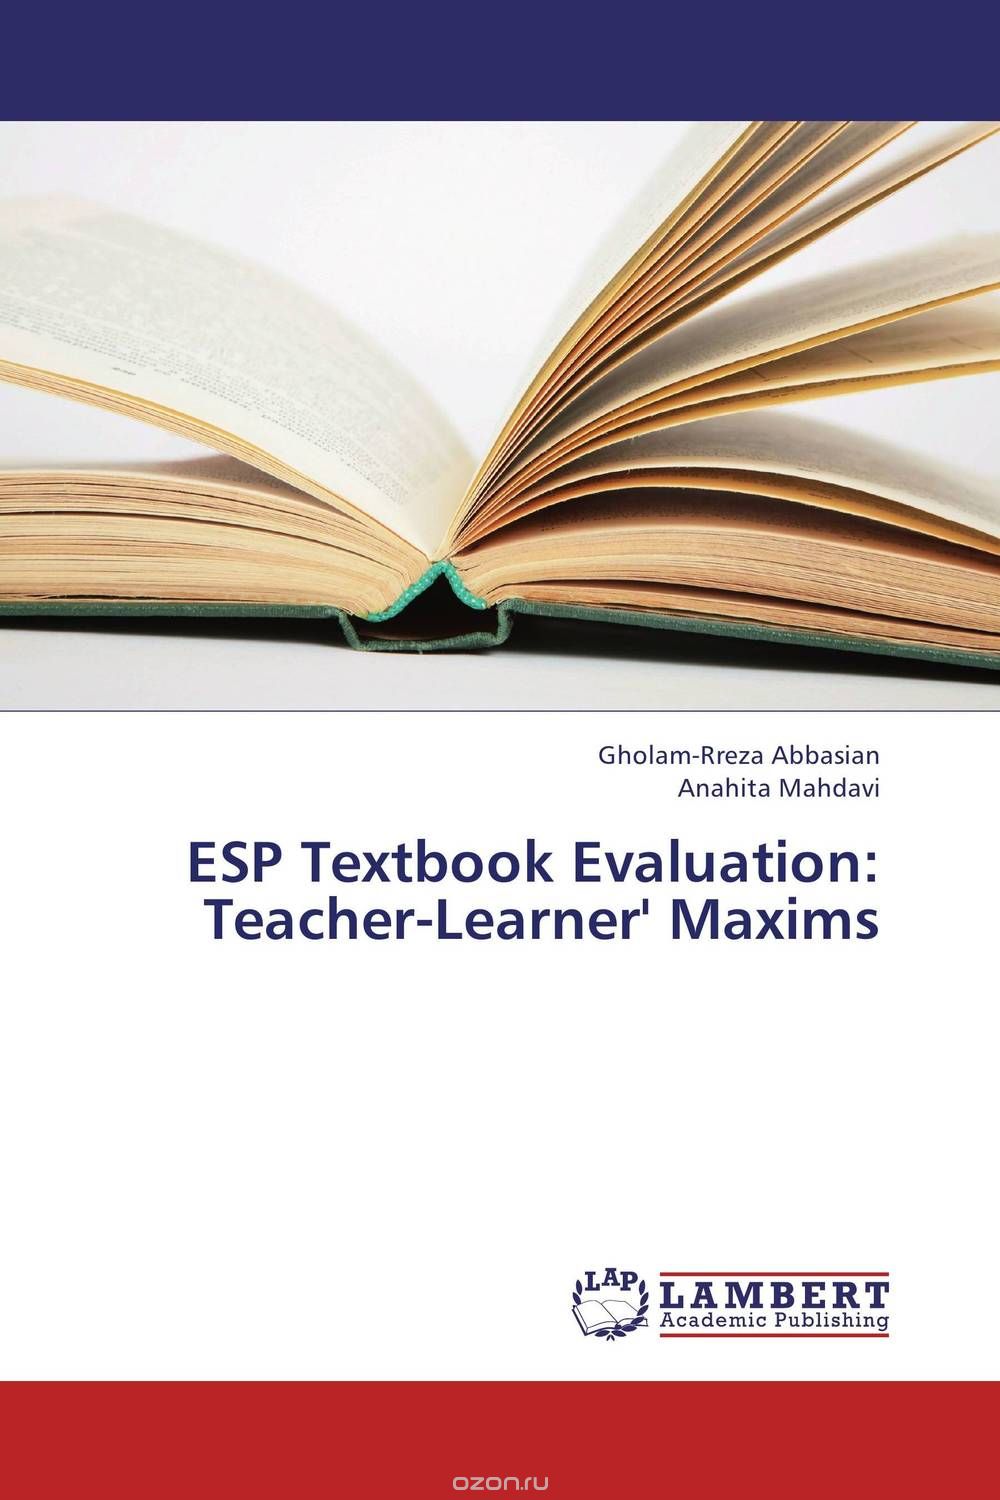 Скачать книгу "ESP Textbook Evaluation: Teacher-Learner' Maxims"